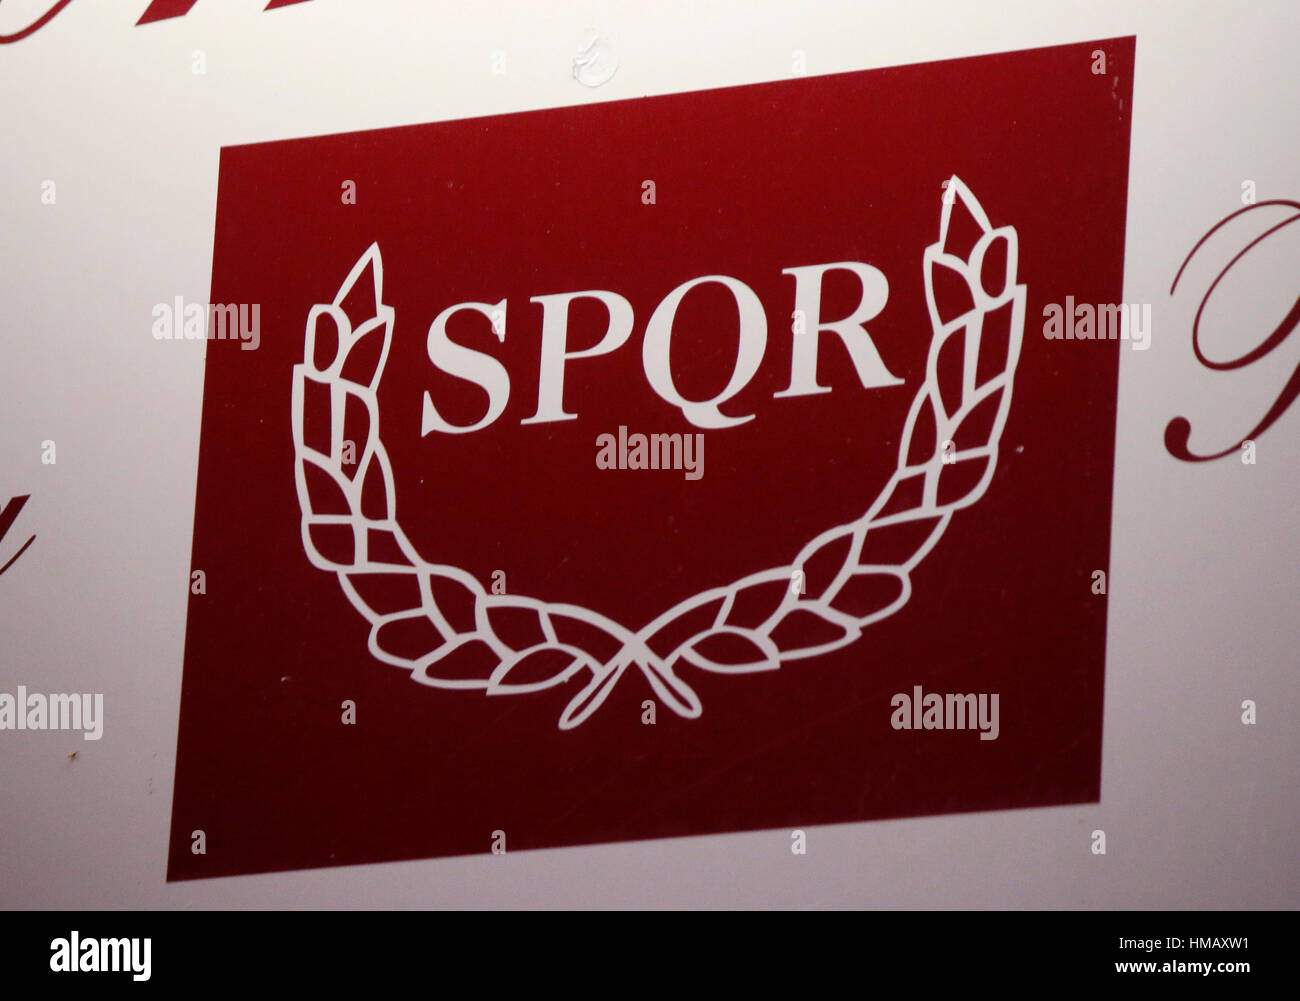 Das Logo der Marke "SPQR", Berlin. Stockfoto